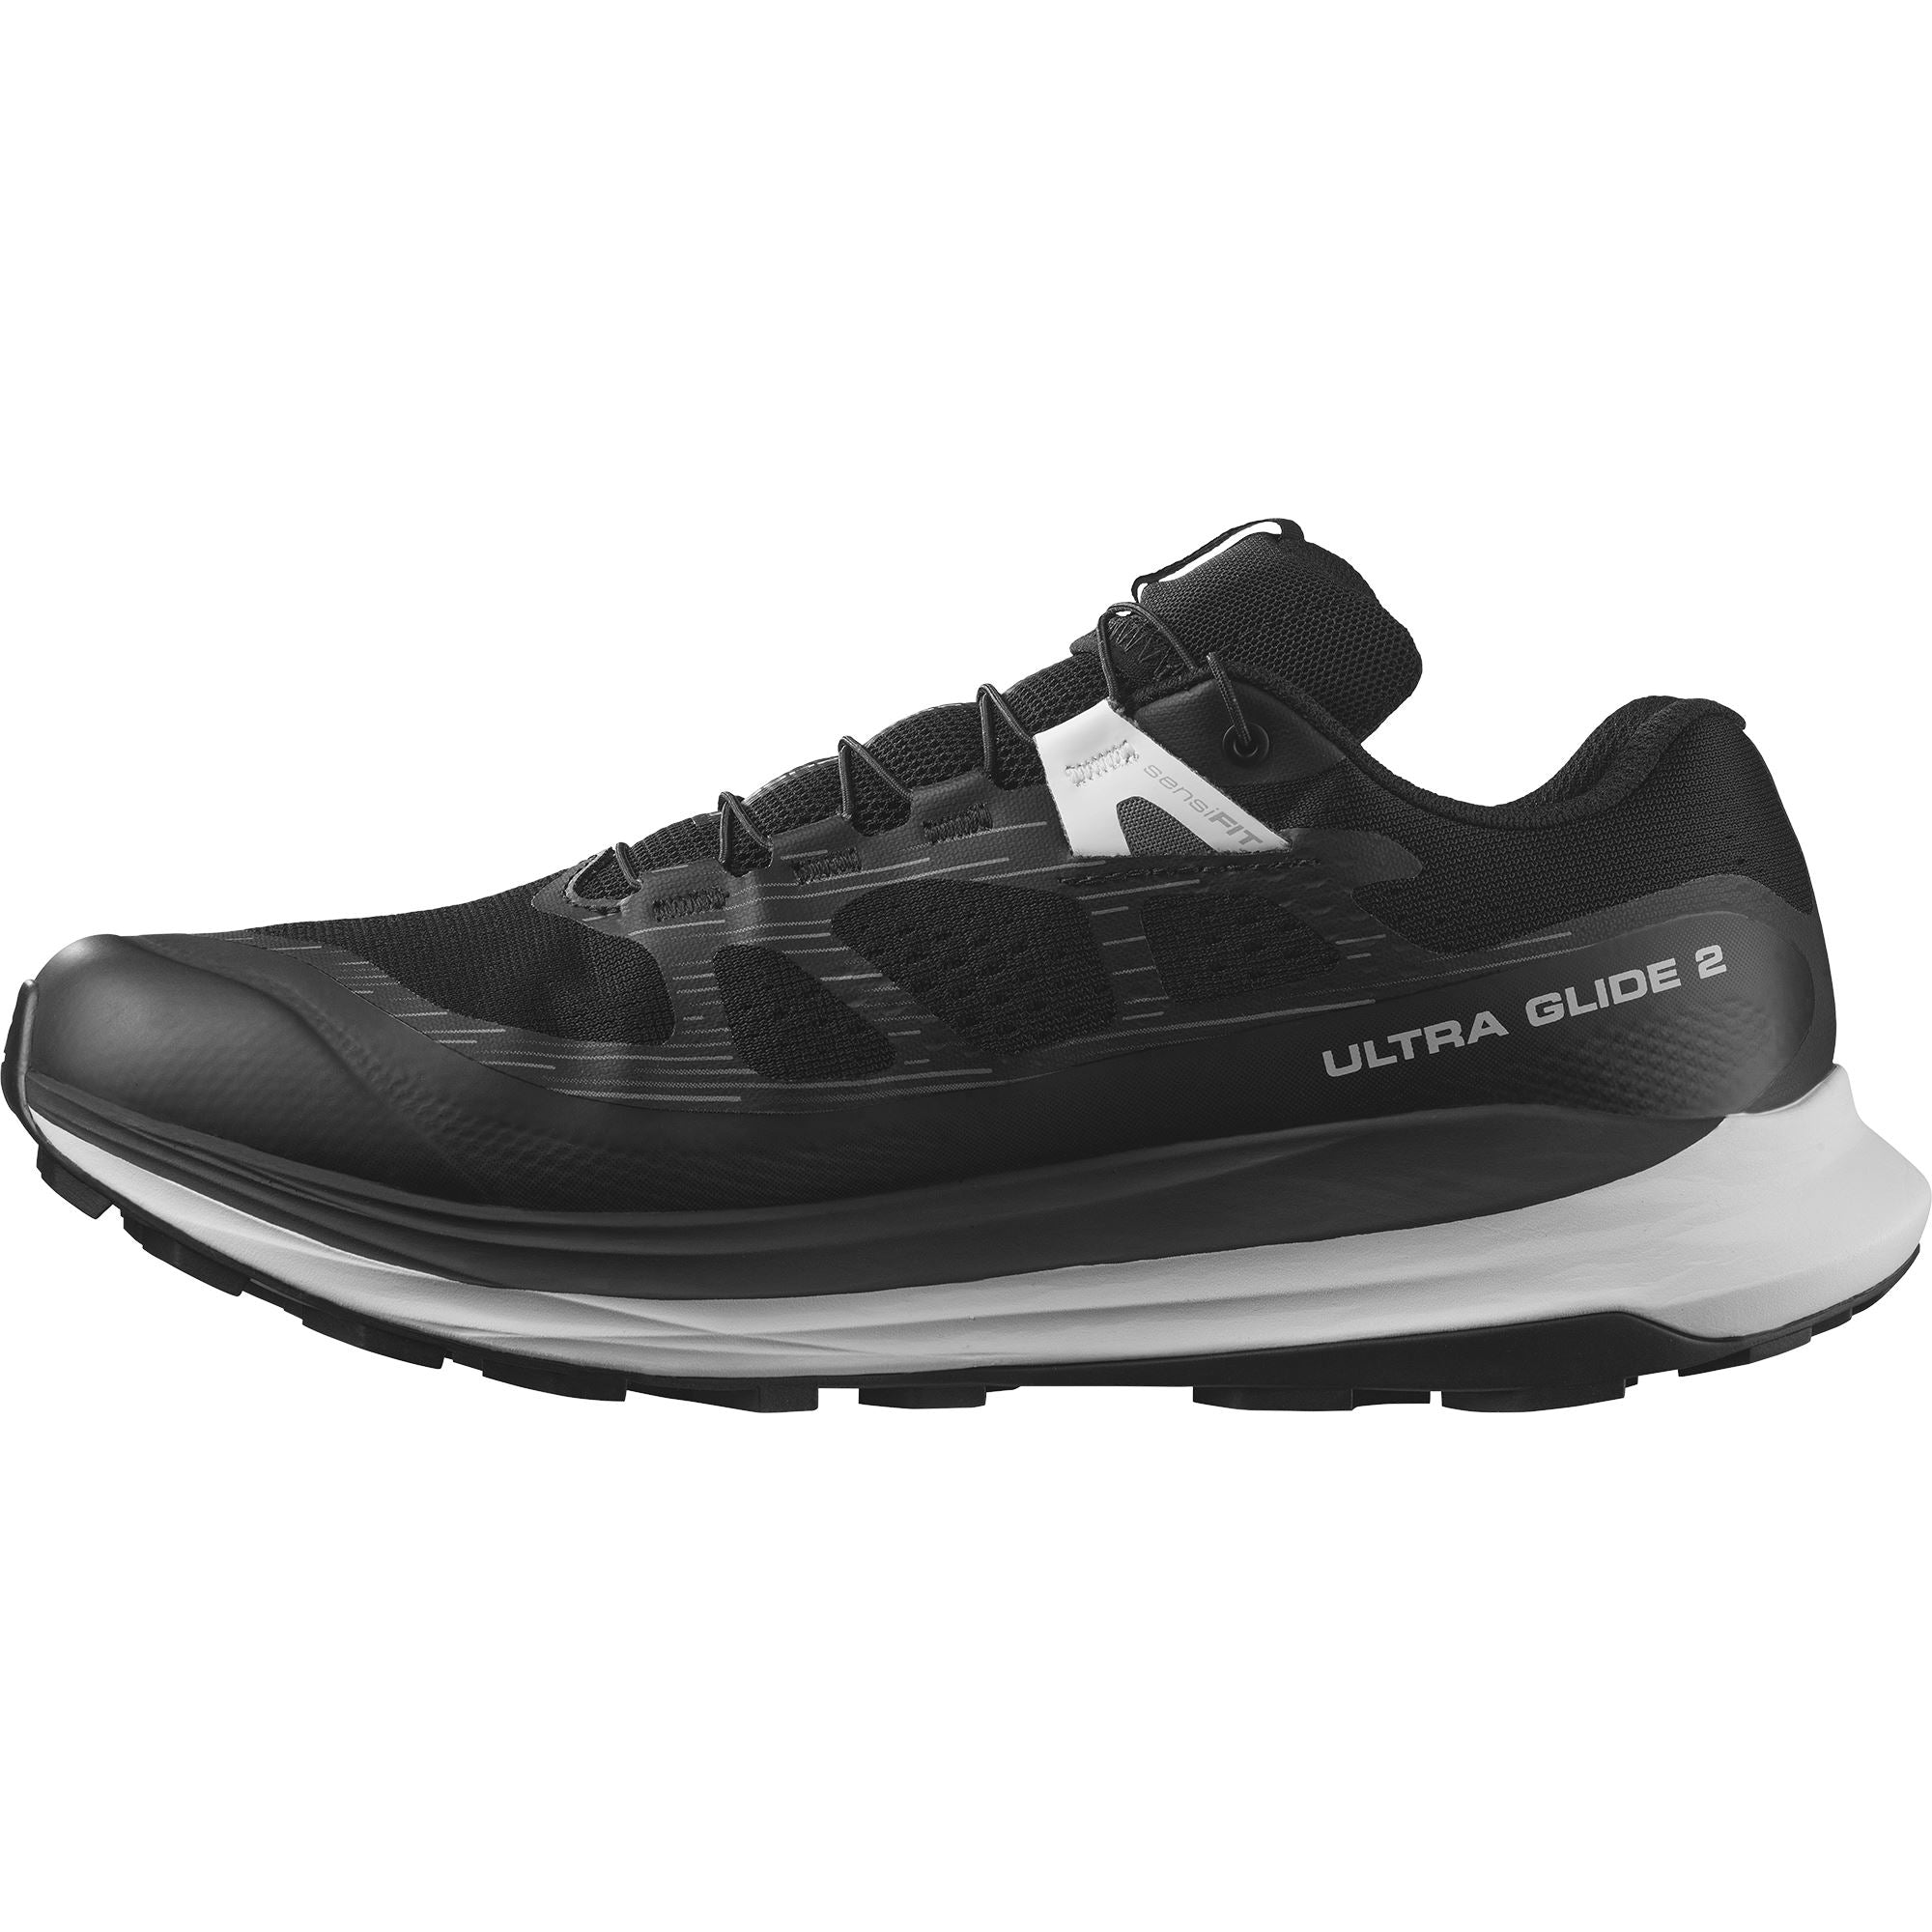 Salomon Ultra Glide 2 GTX Men's Trail Running Shoes 